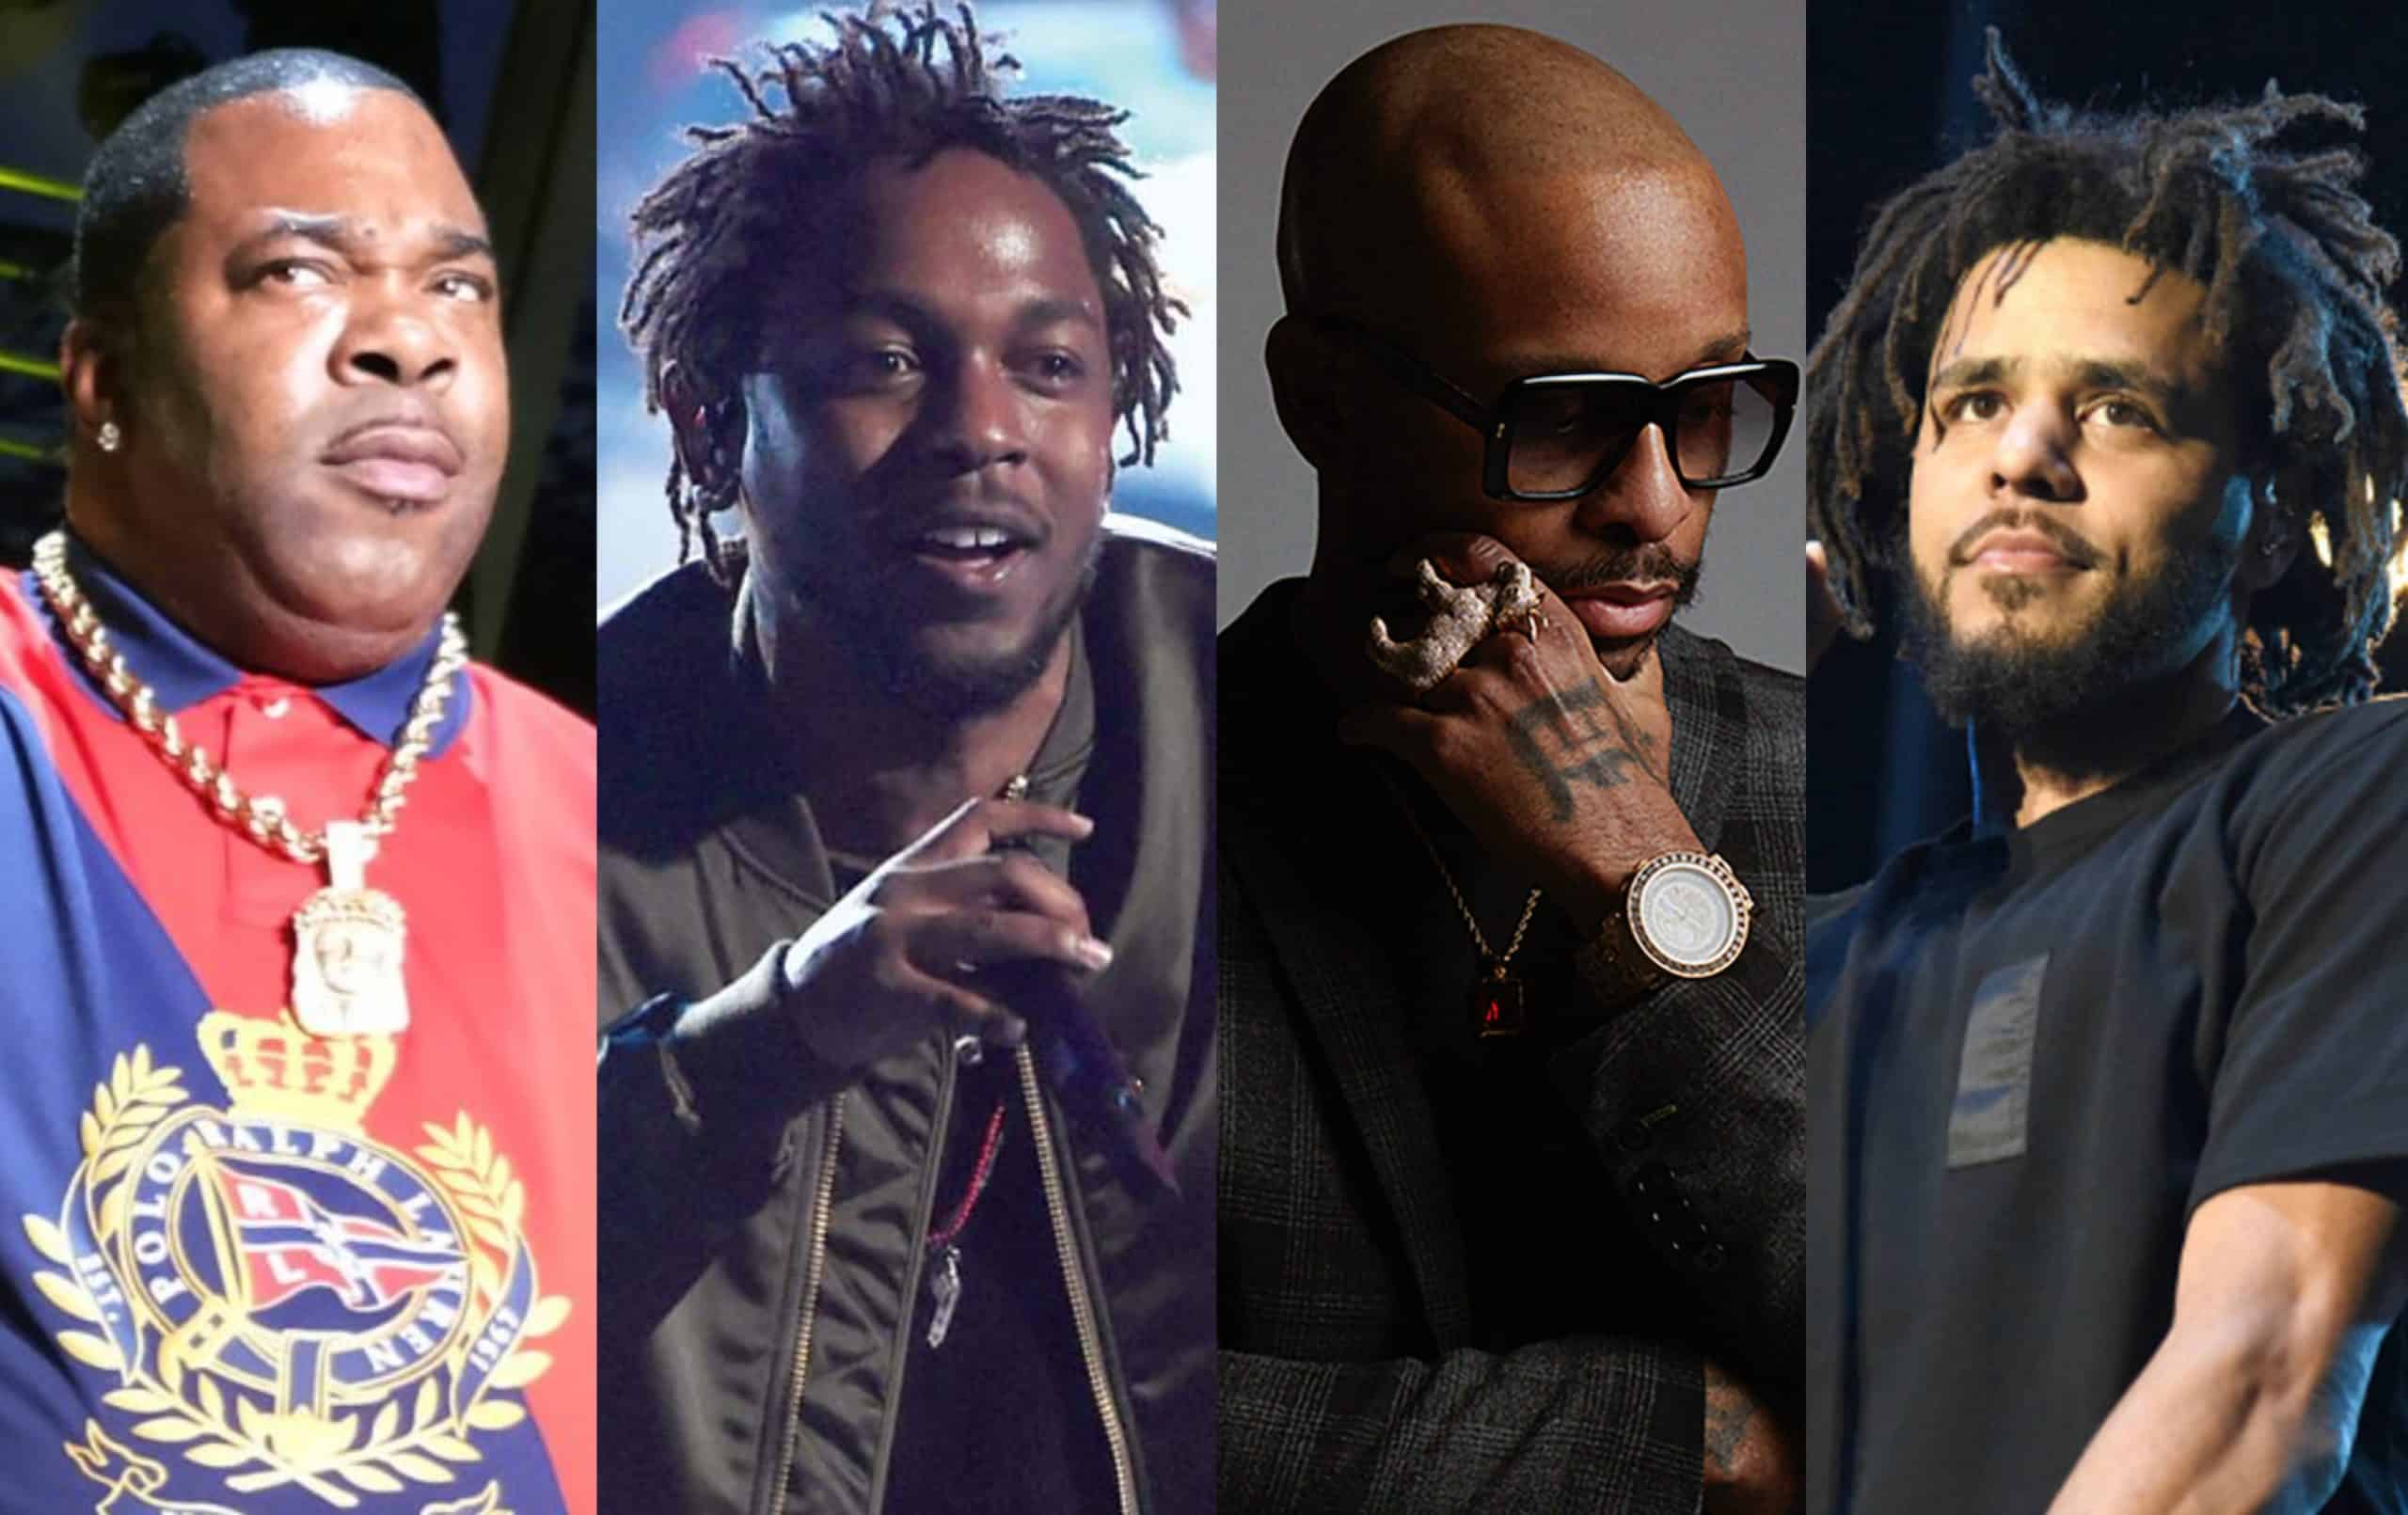 Busta Rhymes Names Kendrick Lamar, J. Cole, Royce Da 5'9 in His Current Favorite Rappers